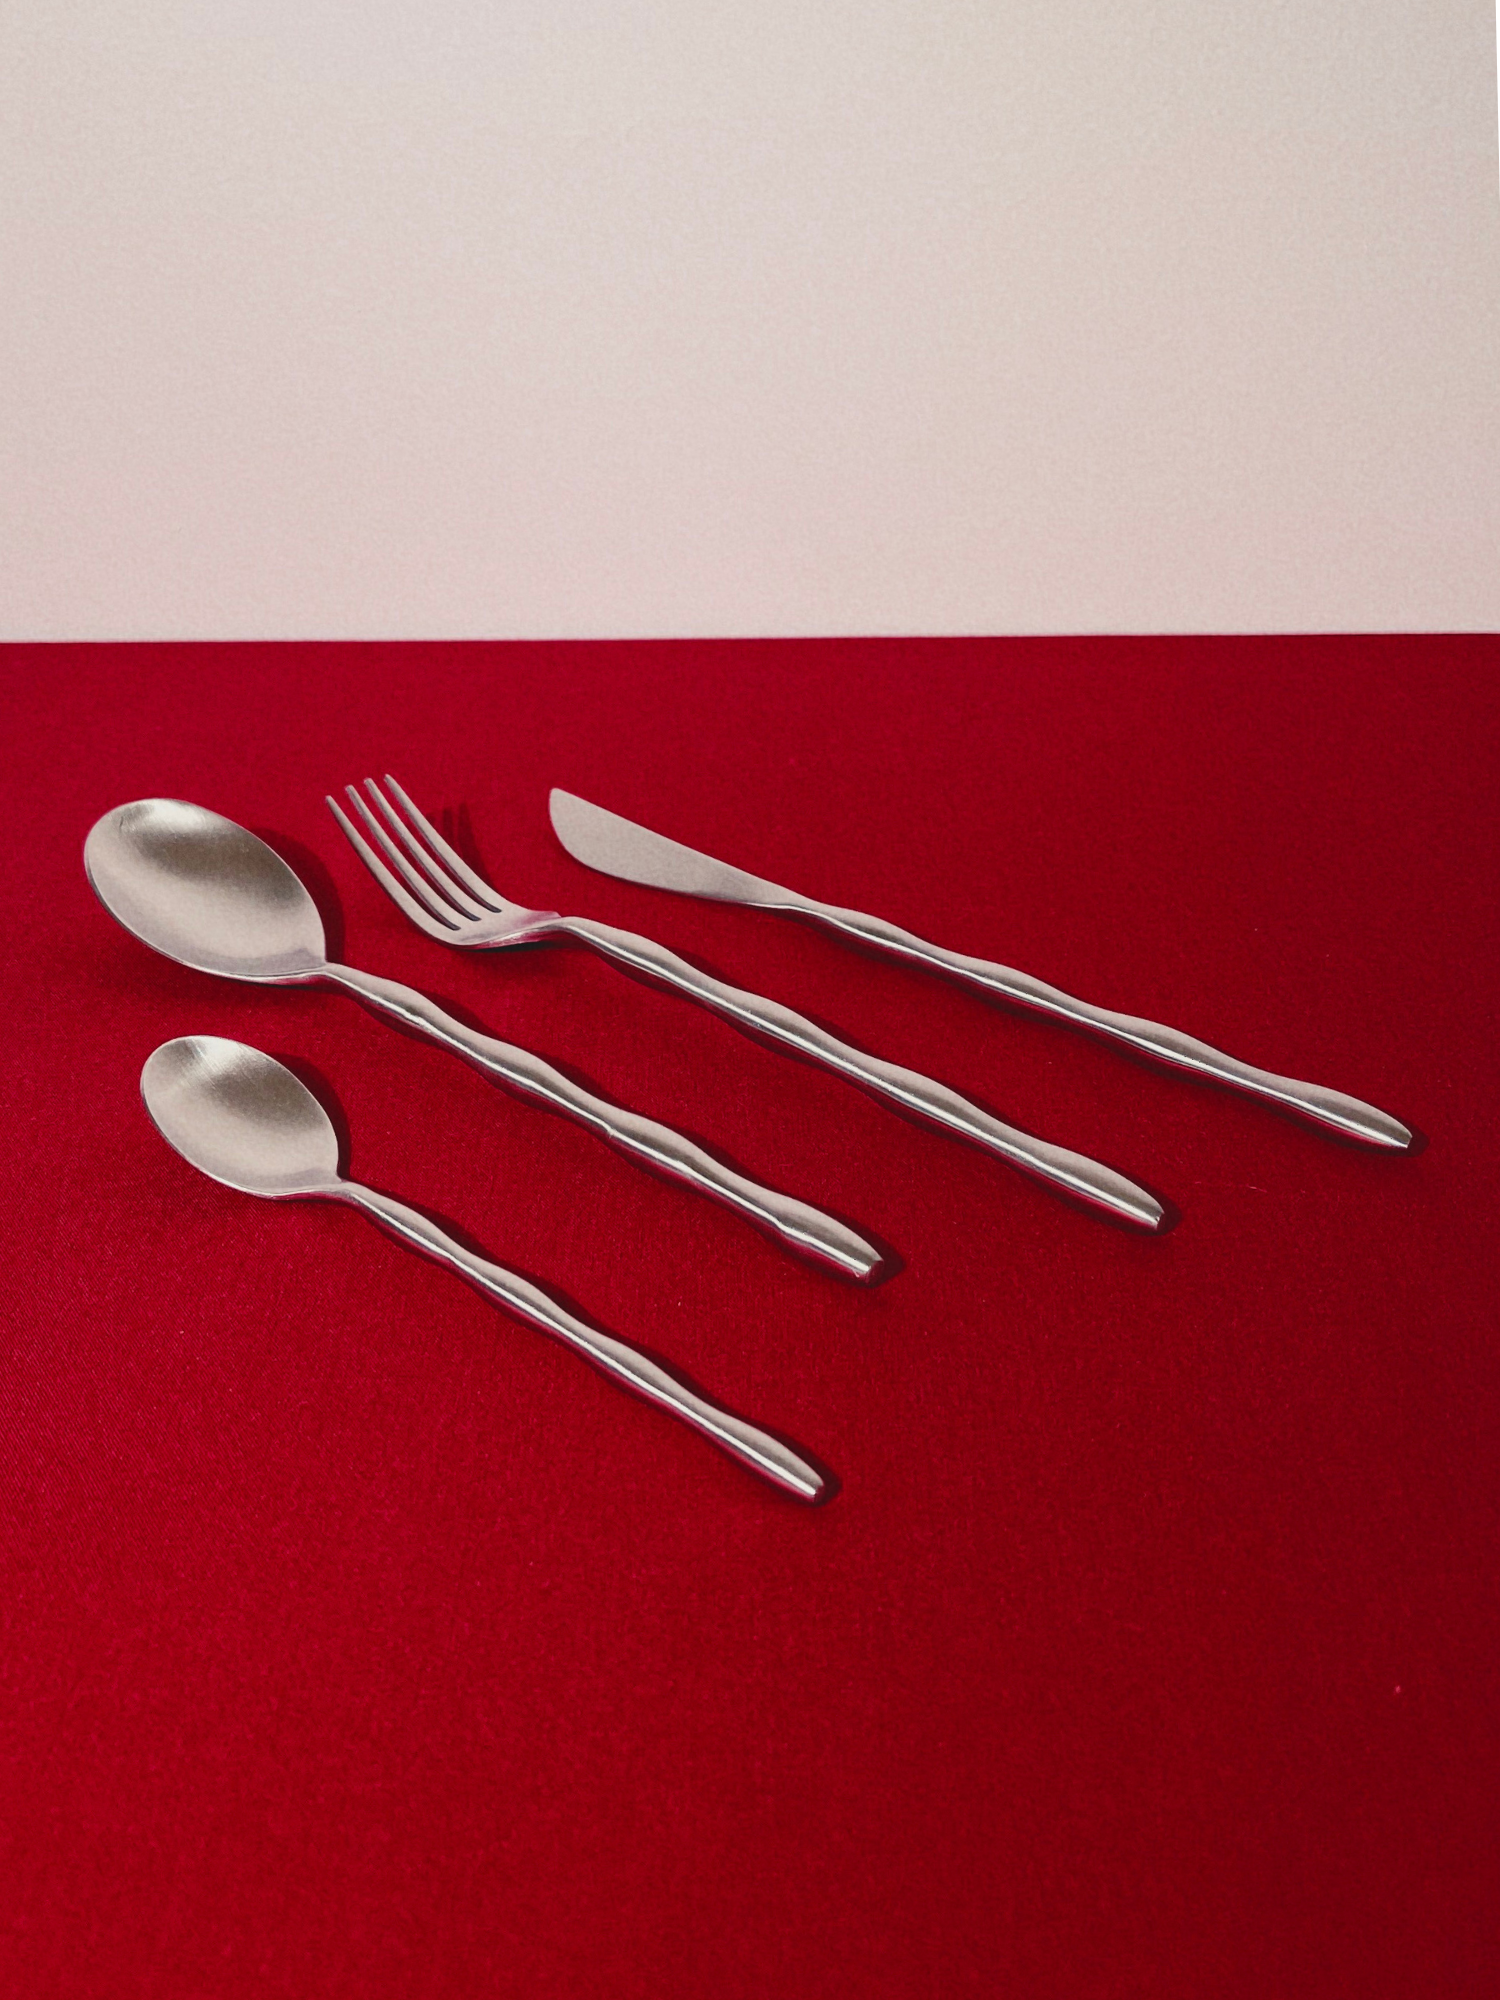 META Curve Cutlery - Brushed Silver